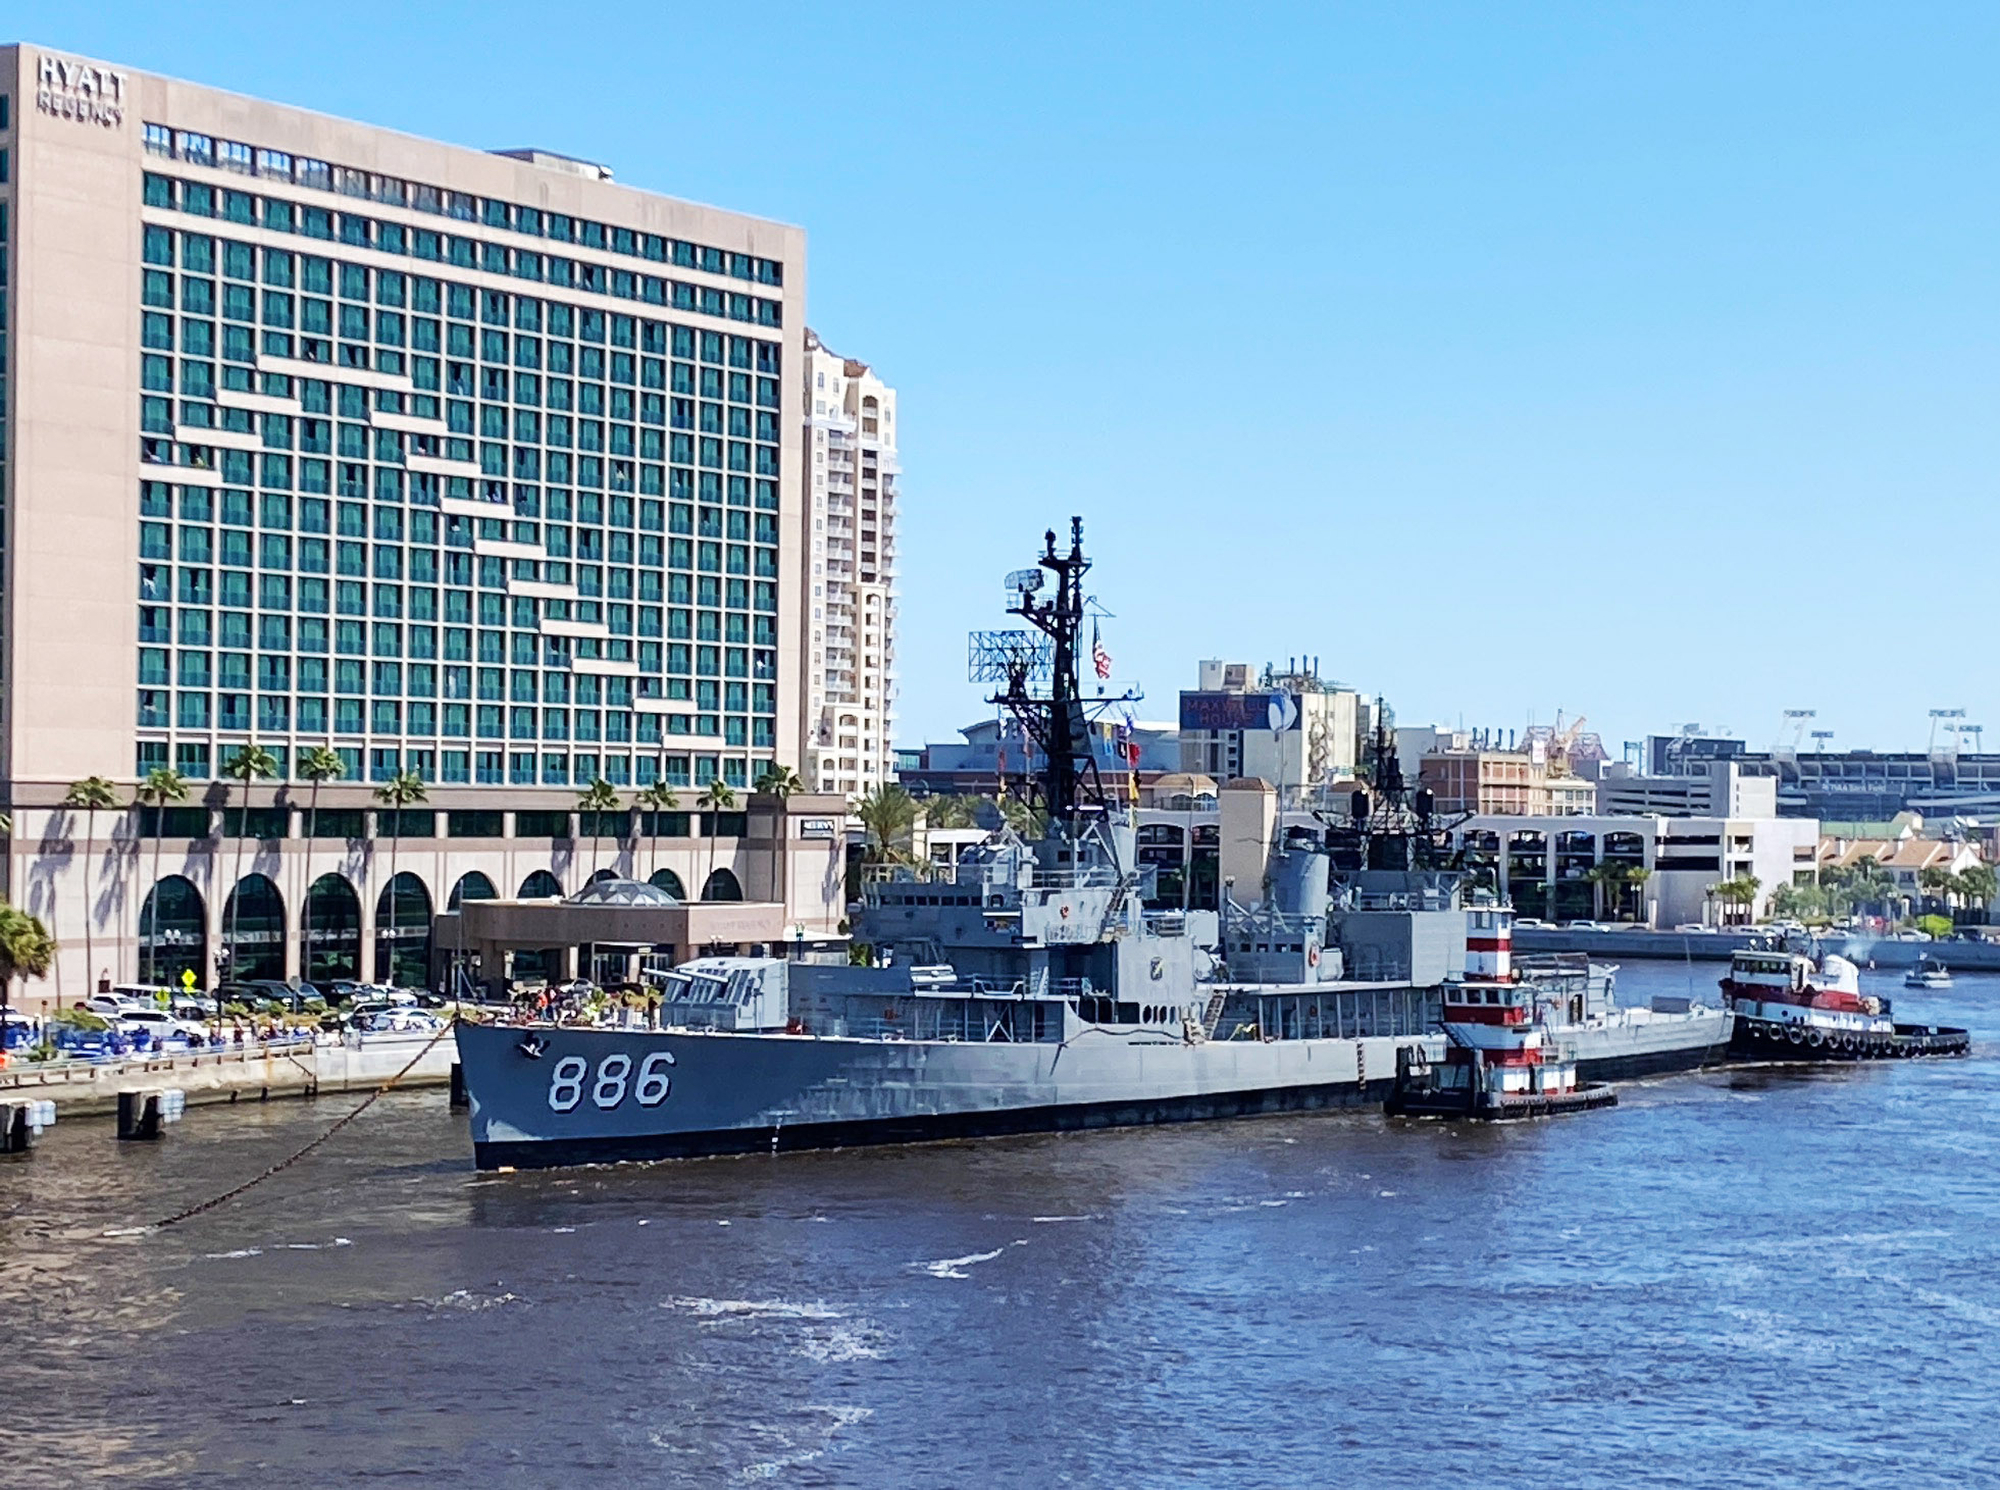 The USS Orleck sits alongside the Hyatt Regency Jacksonville Riverfront hotel Downtown.